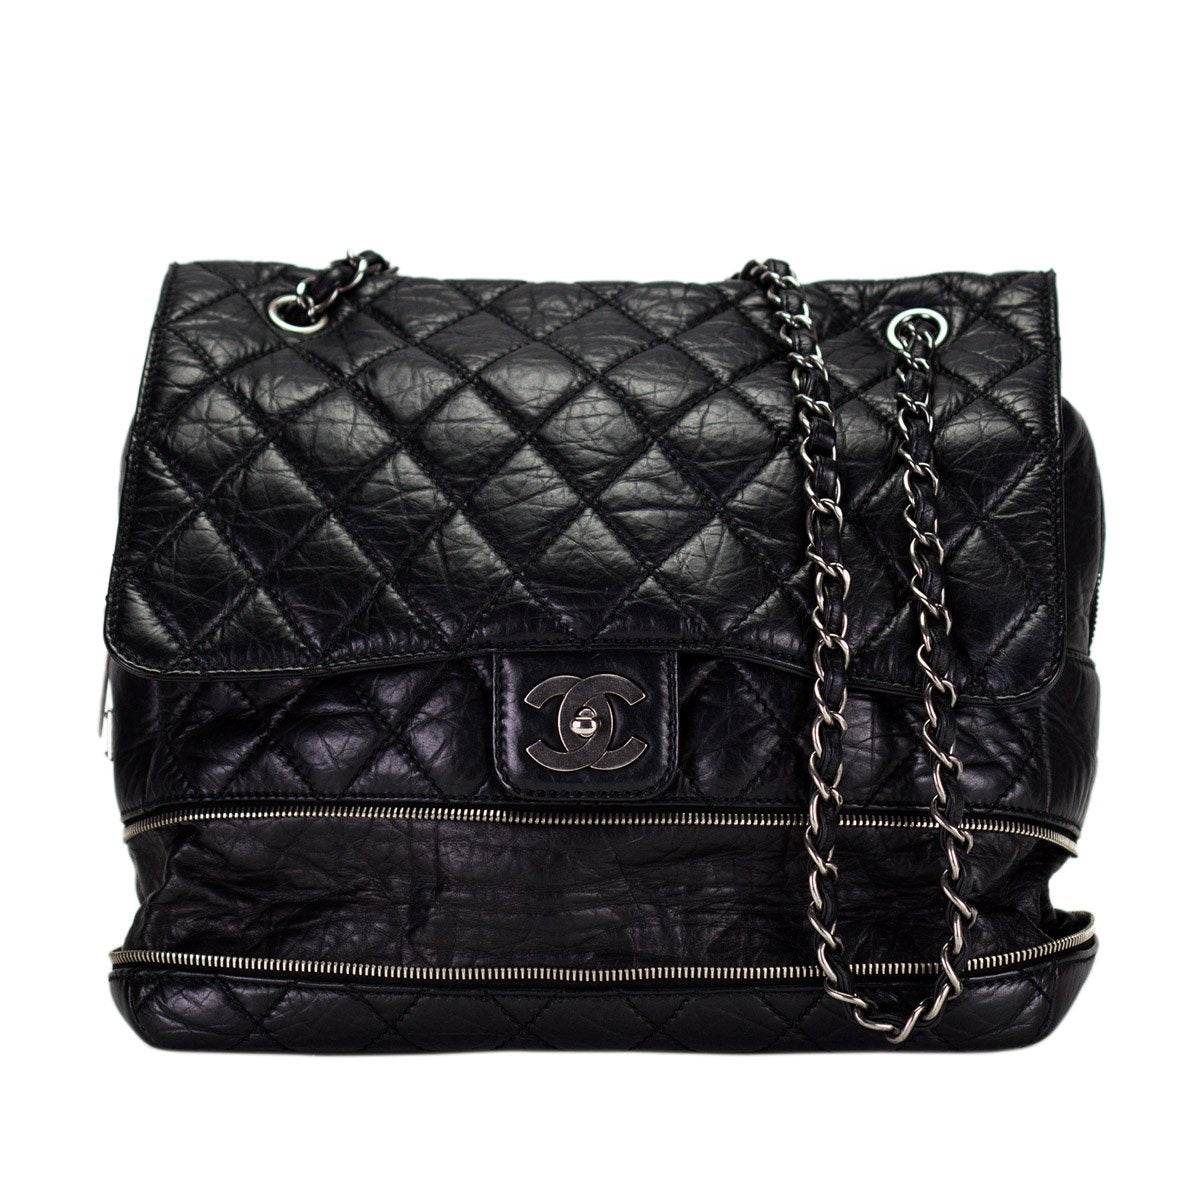 CHANEL CHANEL Caviar Large Bags & Handbags for Women